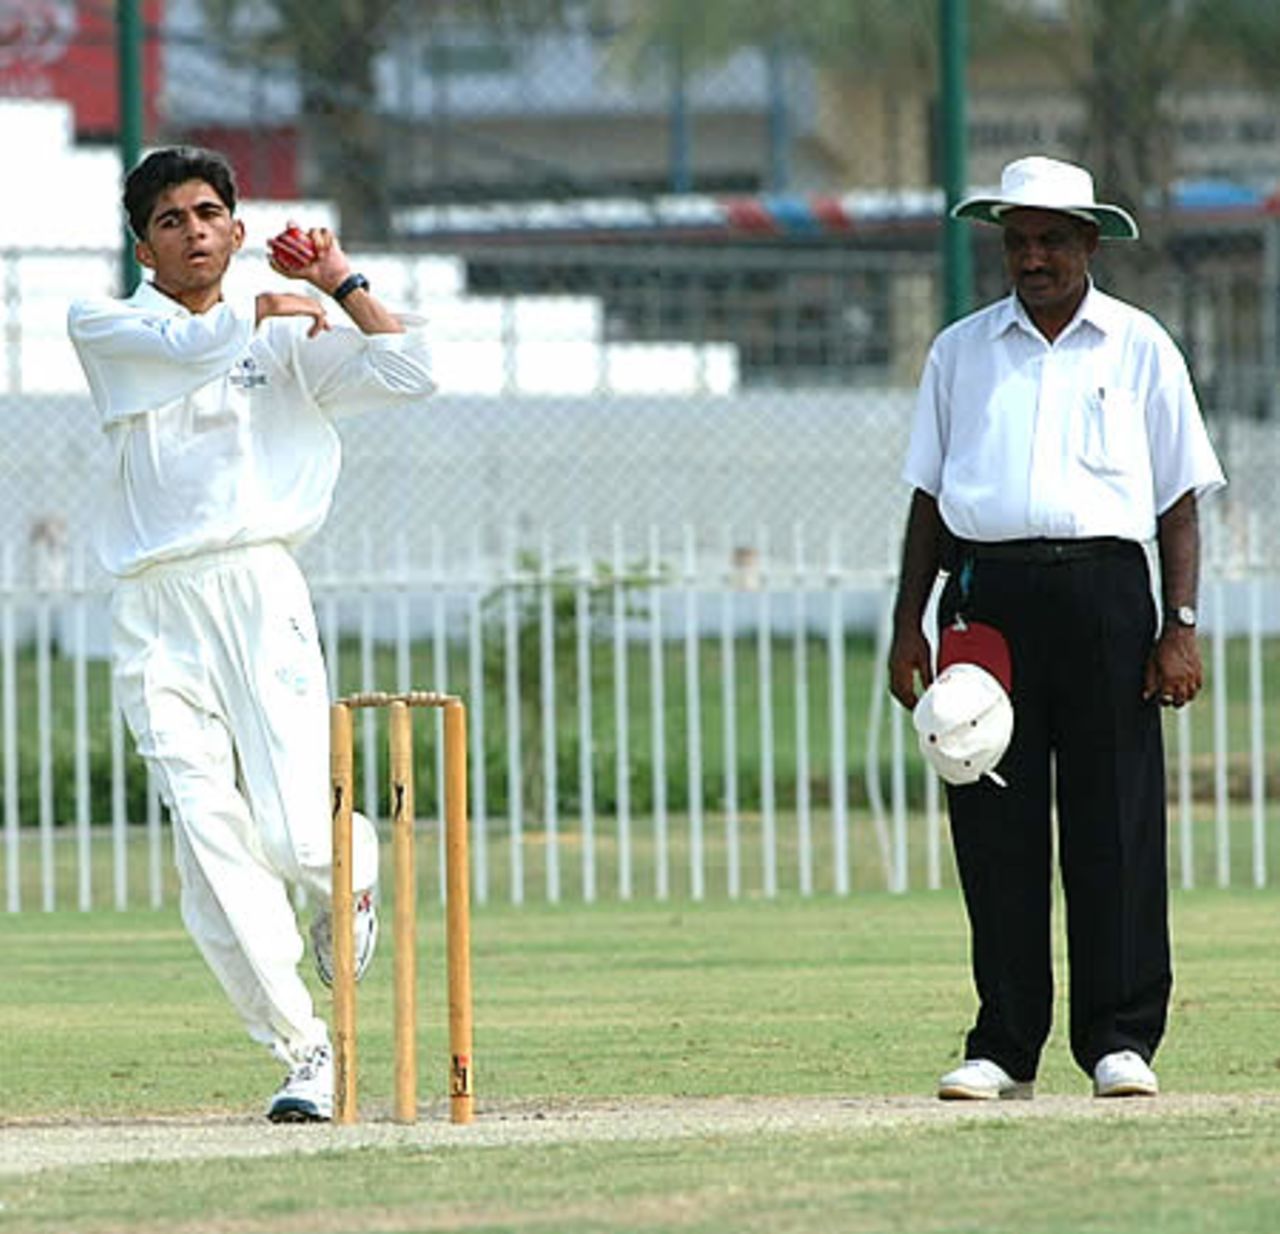 Abdul Aziz of Qatar bowls as the umpire looks on, Qatar Under-19s v United Arab Emirates Under-19s at United Bank Ltd Sports Complex Karachi, Youth Asia Cup 2003, 16 July 2003.